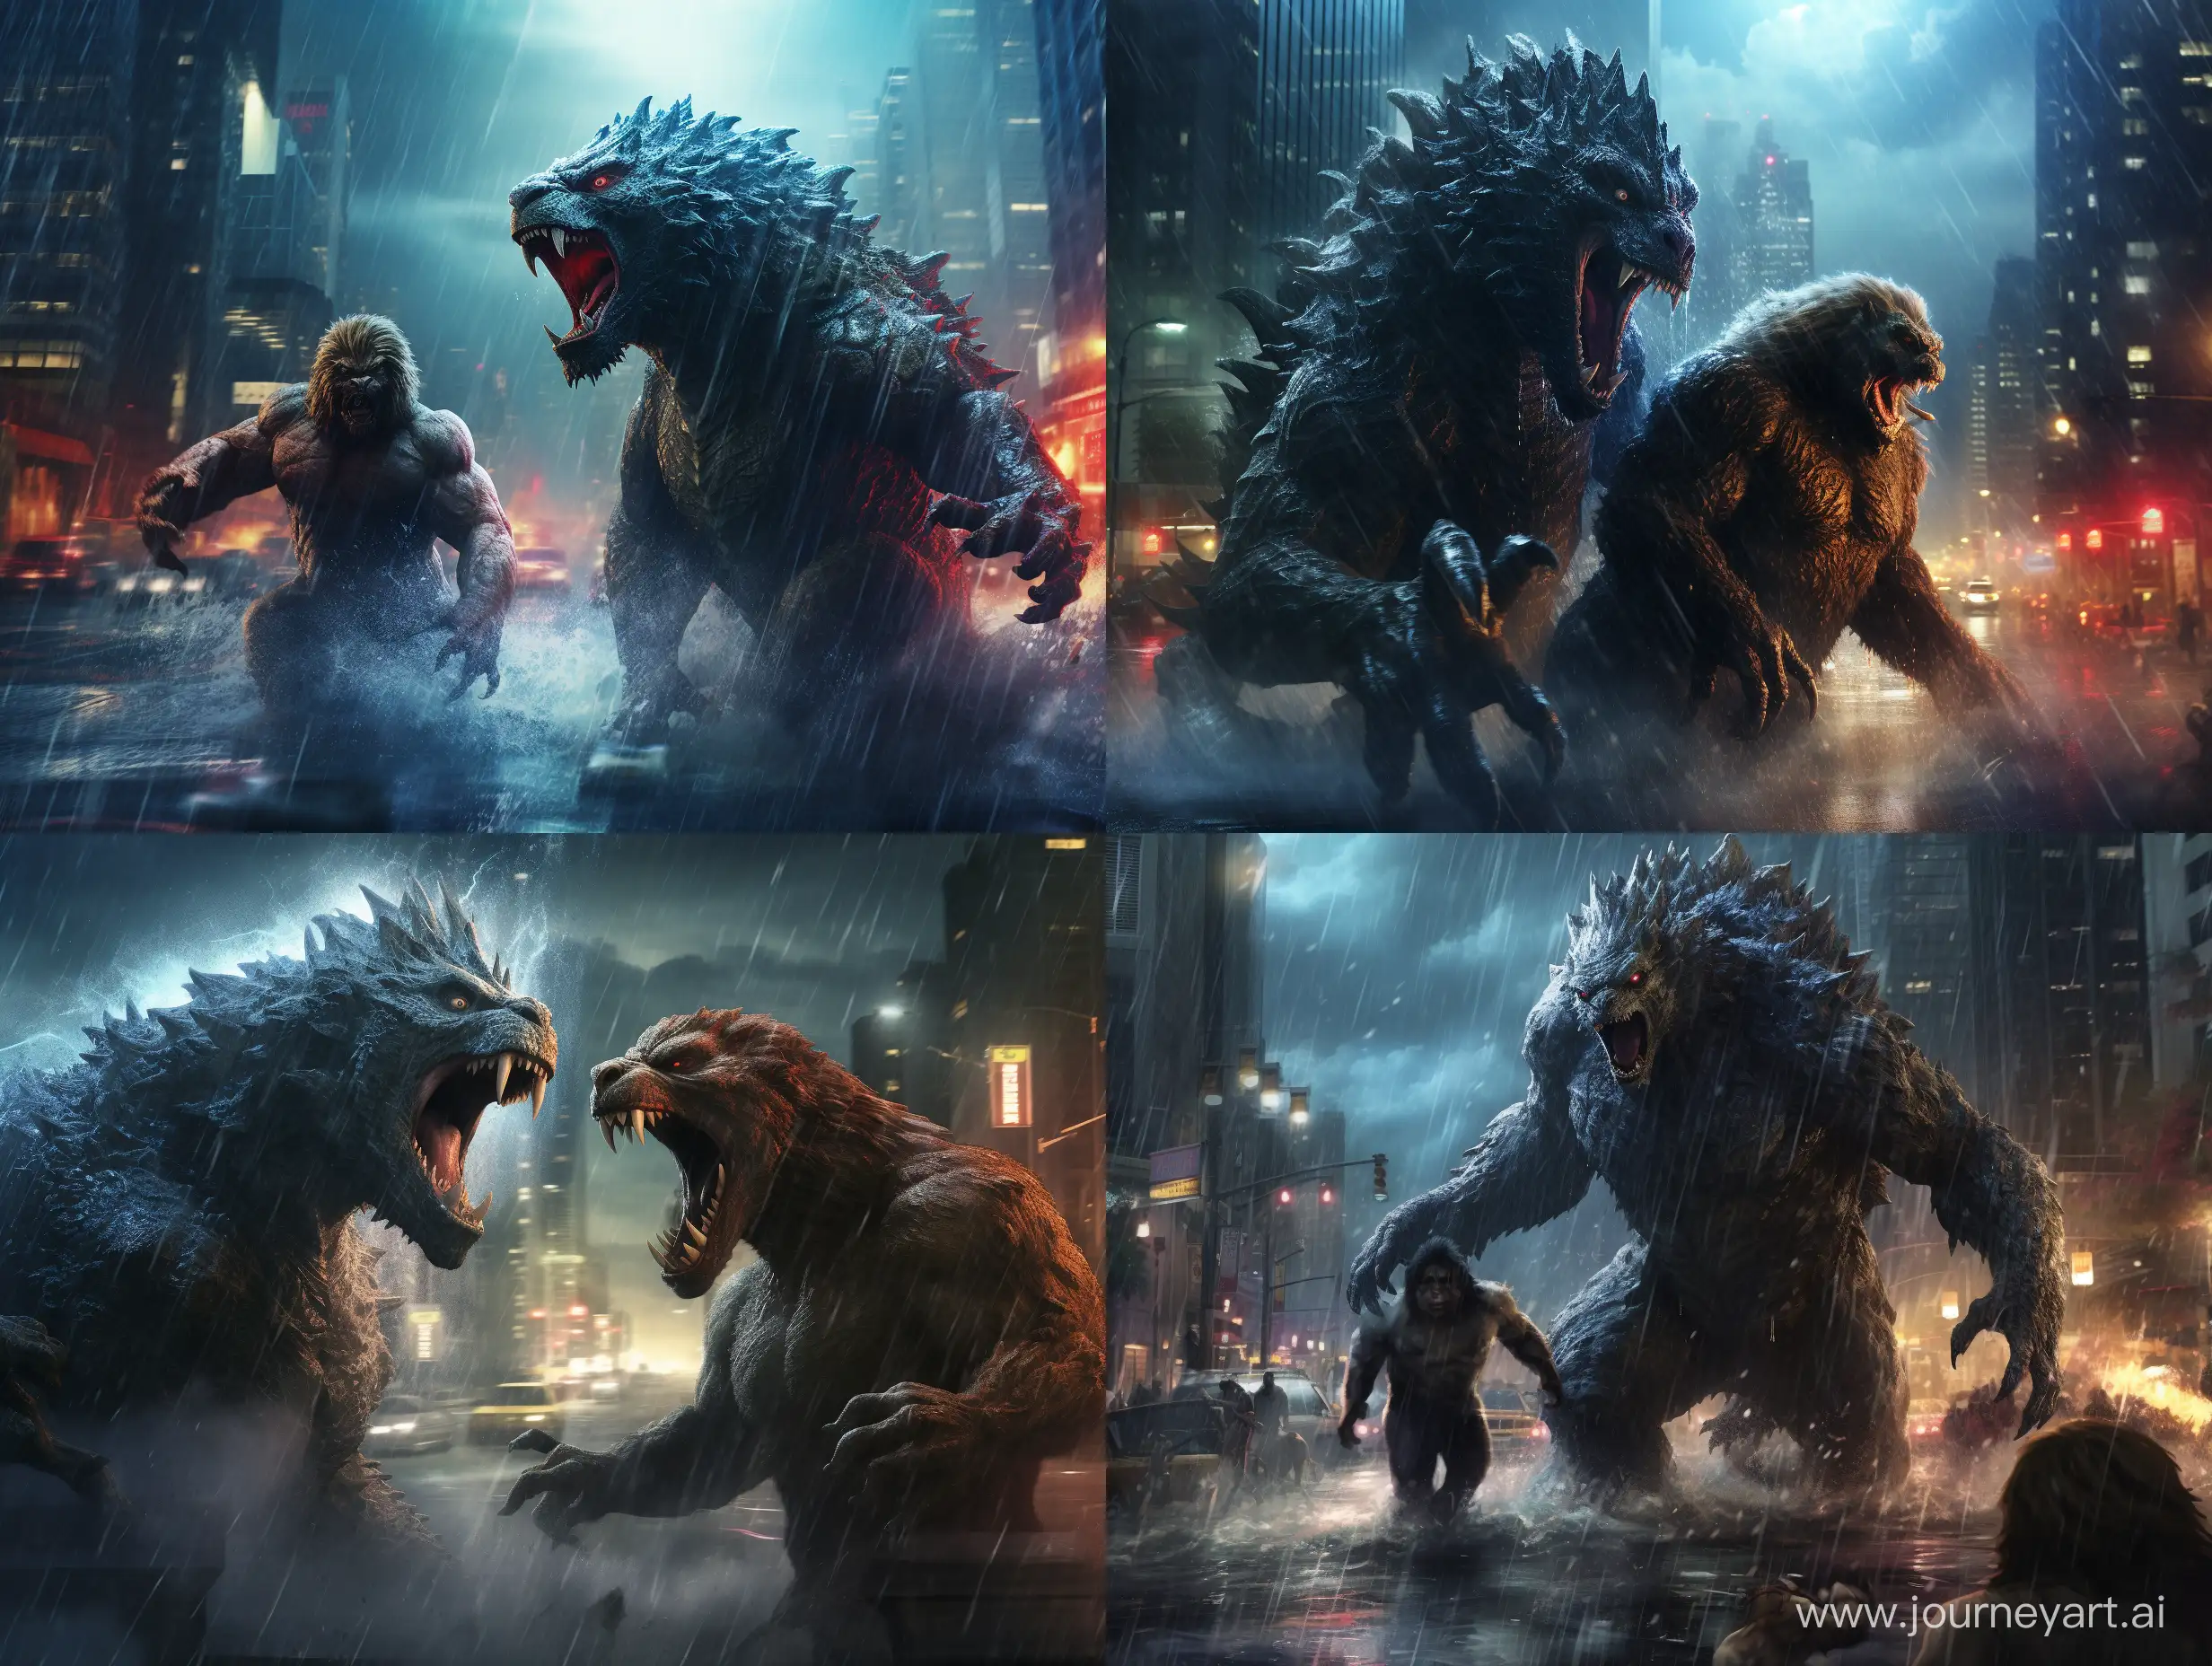 Epic-Night-Battle-Godzilla-vs-King-Kong-in-RainDrenched-City